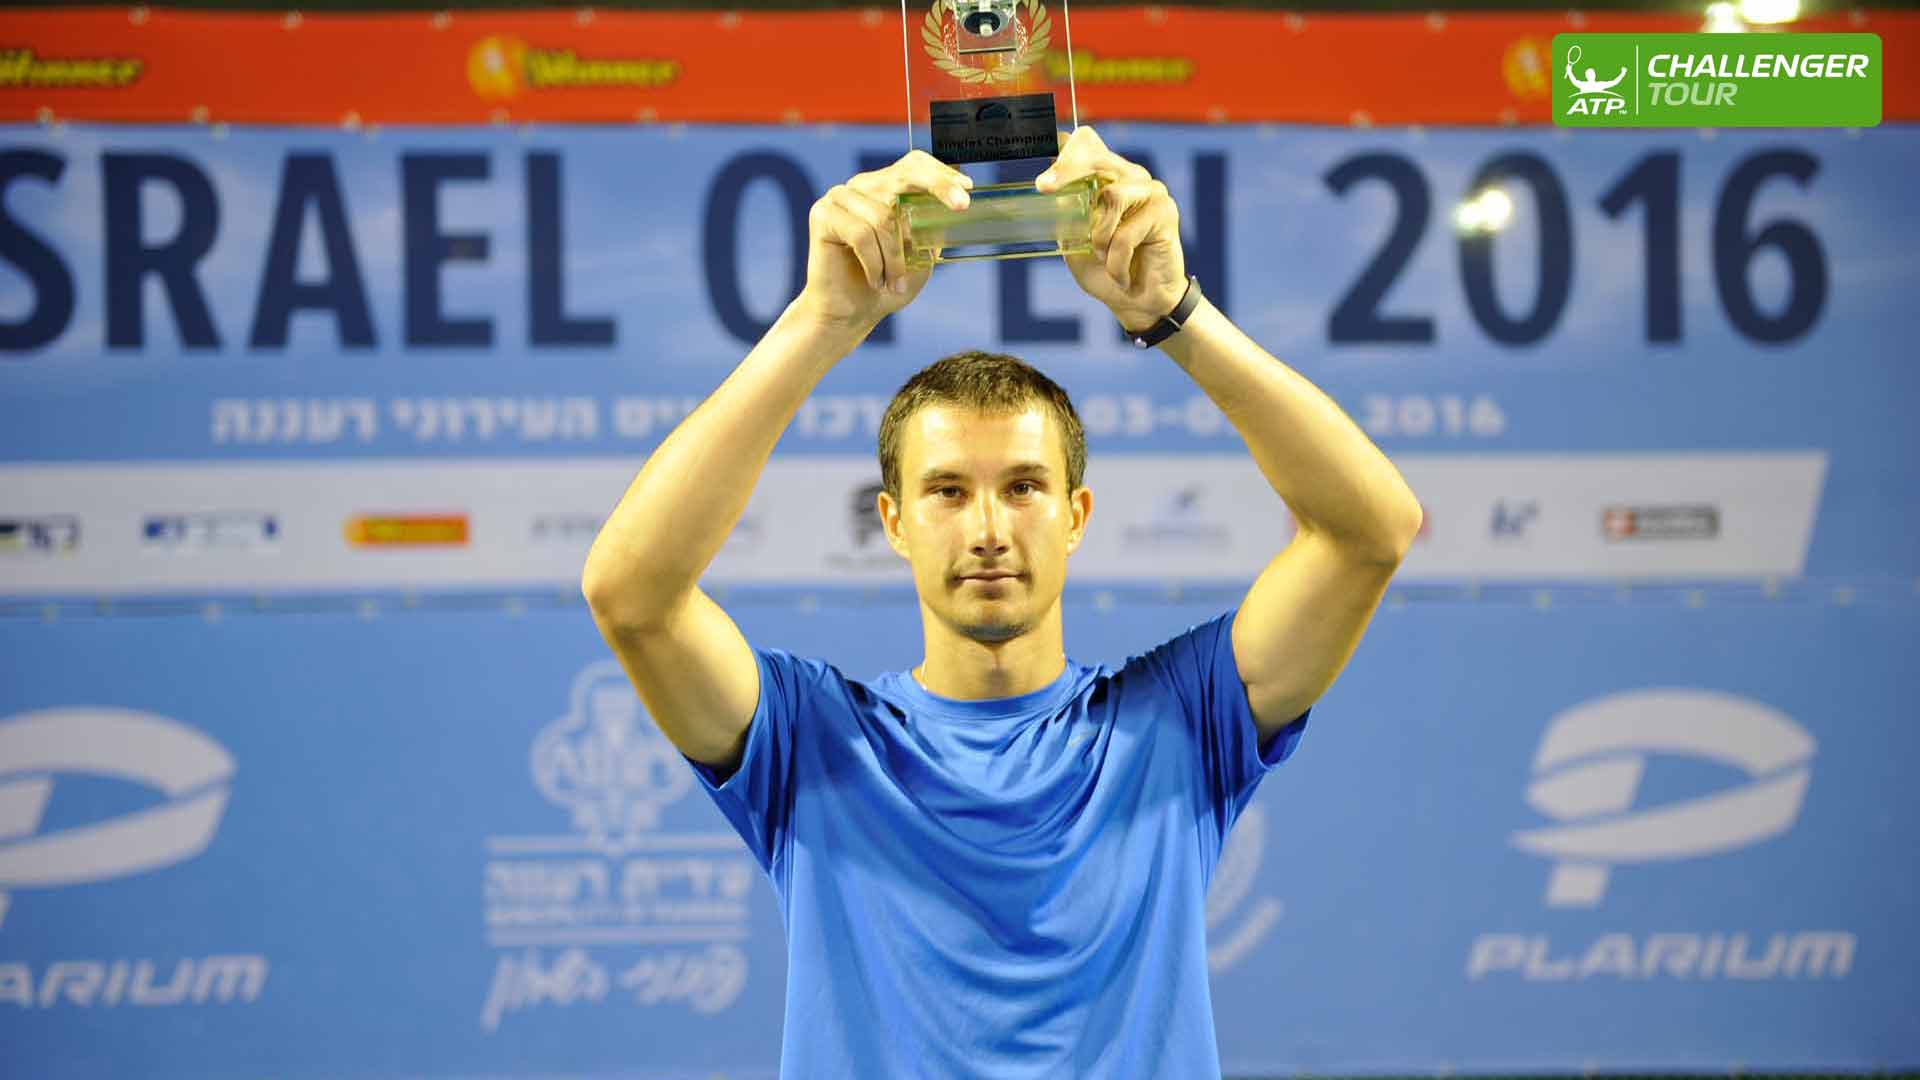 Donskoy Takes Title In Raanana ATP Tour Tennis